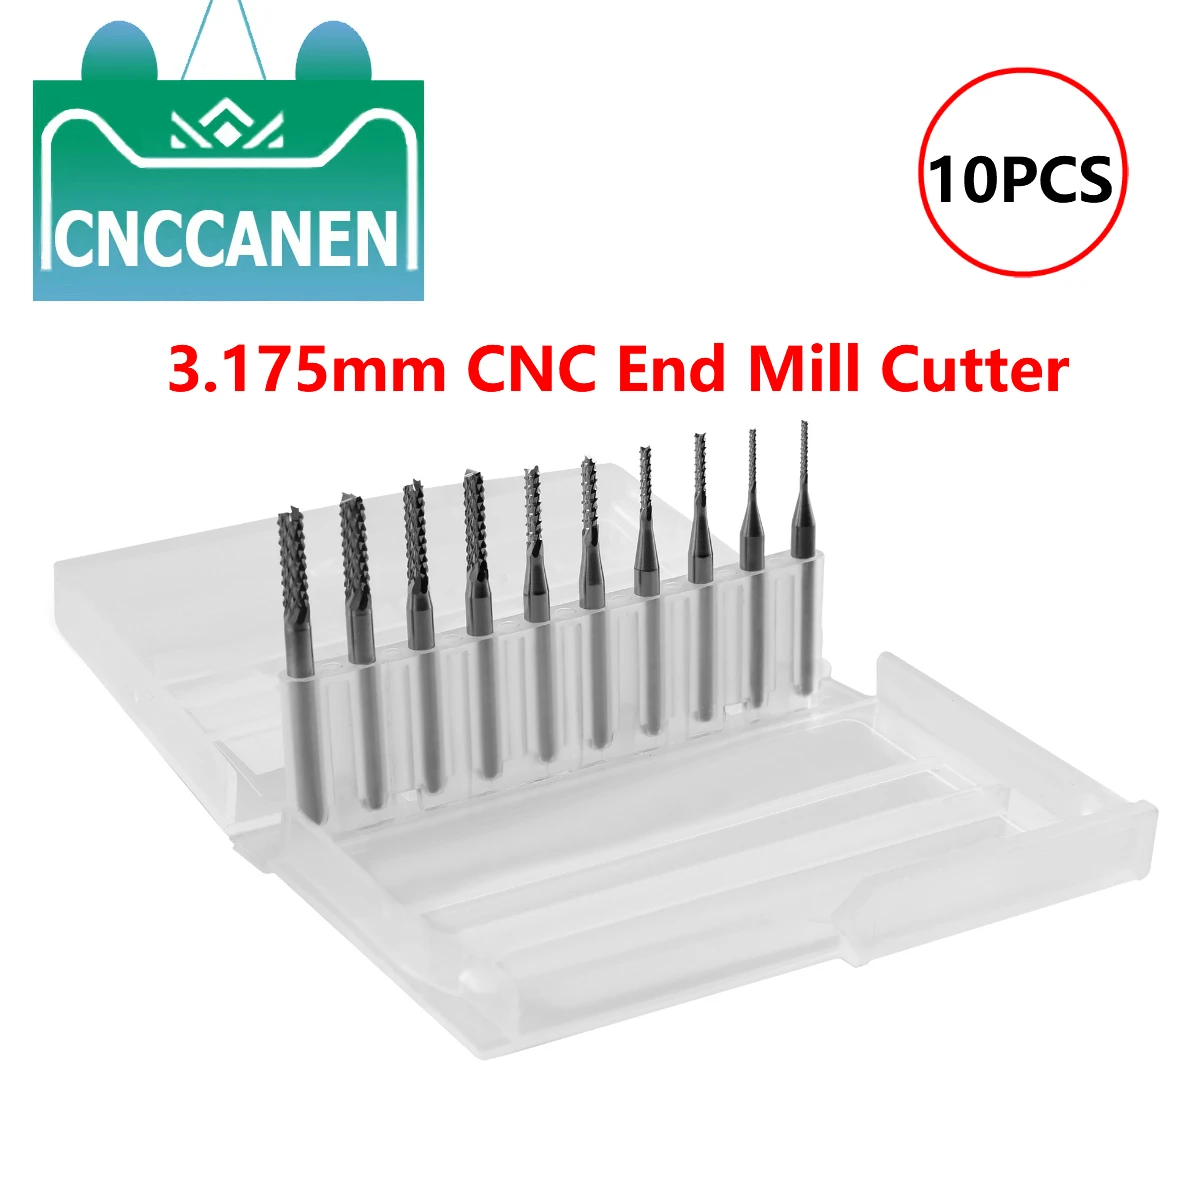 10pcs 3.175mmx 1MM, 1.5MM, 2MM, 2.5MM, 3.0MM Diameter CNC End Mill Cutter Mini PCB Carbide Router Bits Kit Set For Milling Tools